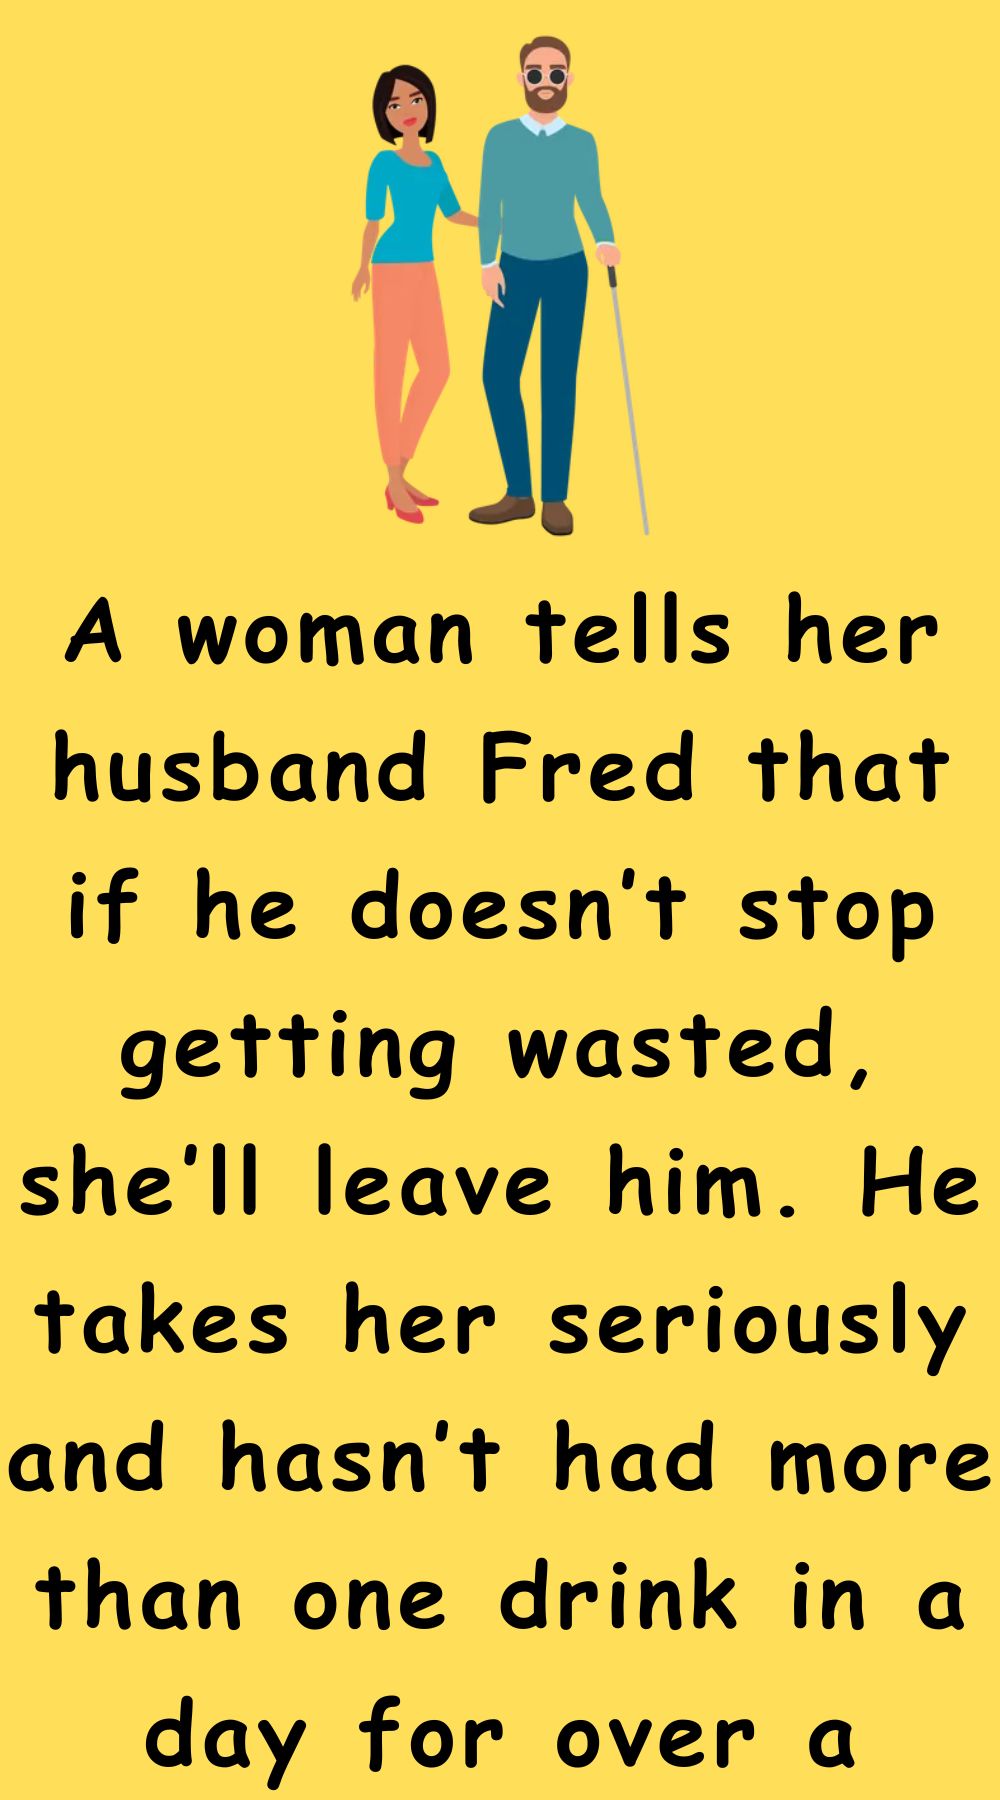 A woman tells her husband Fred